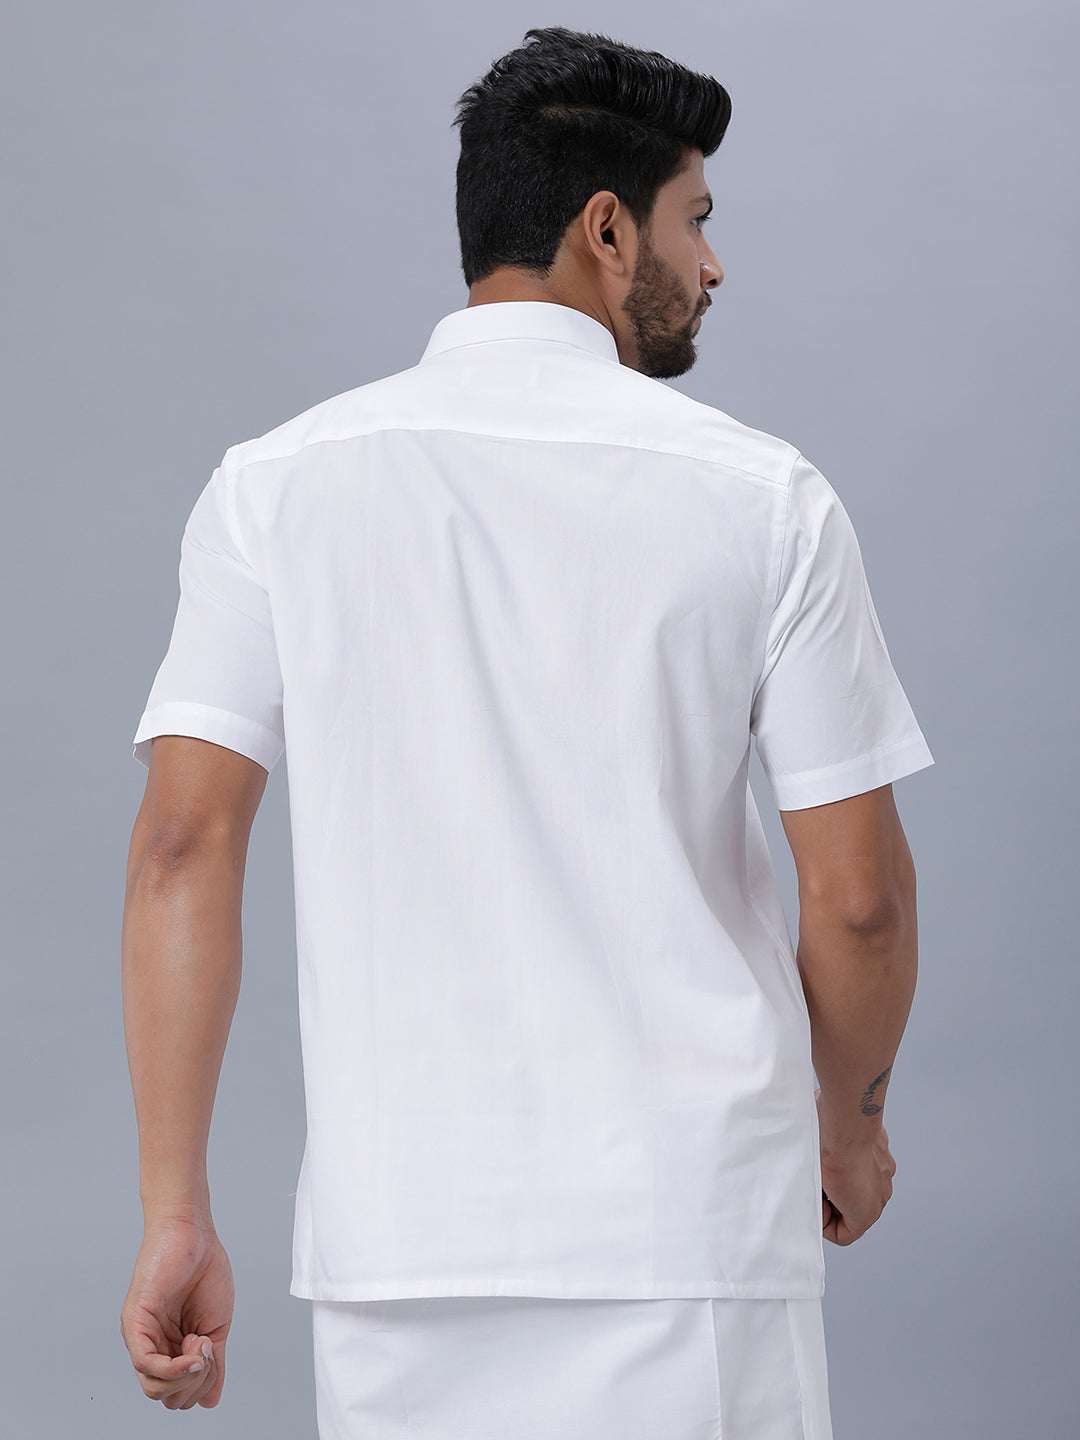 Mens Cotton Blended Half Sleeve White Shirt Mist -Back view